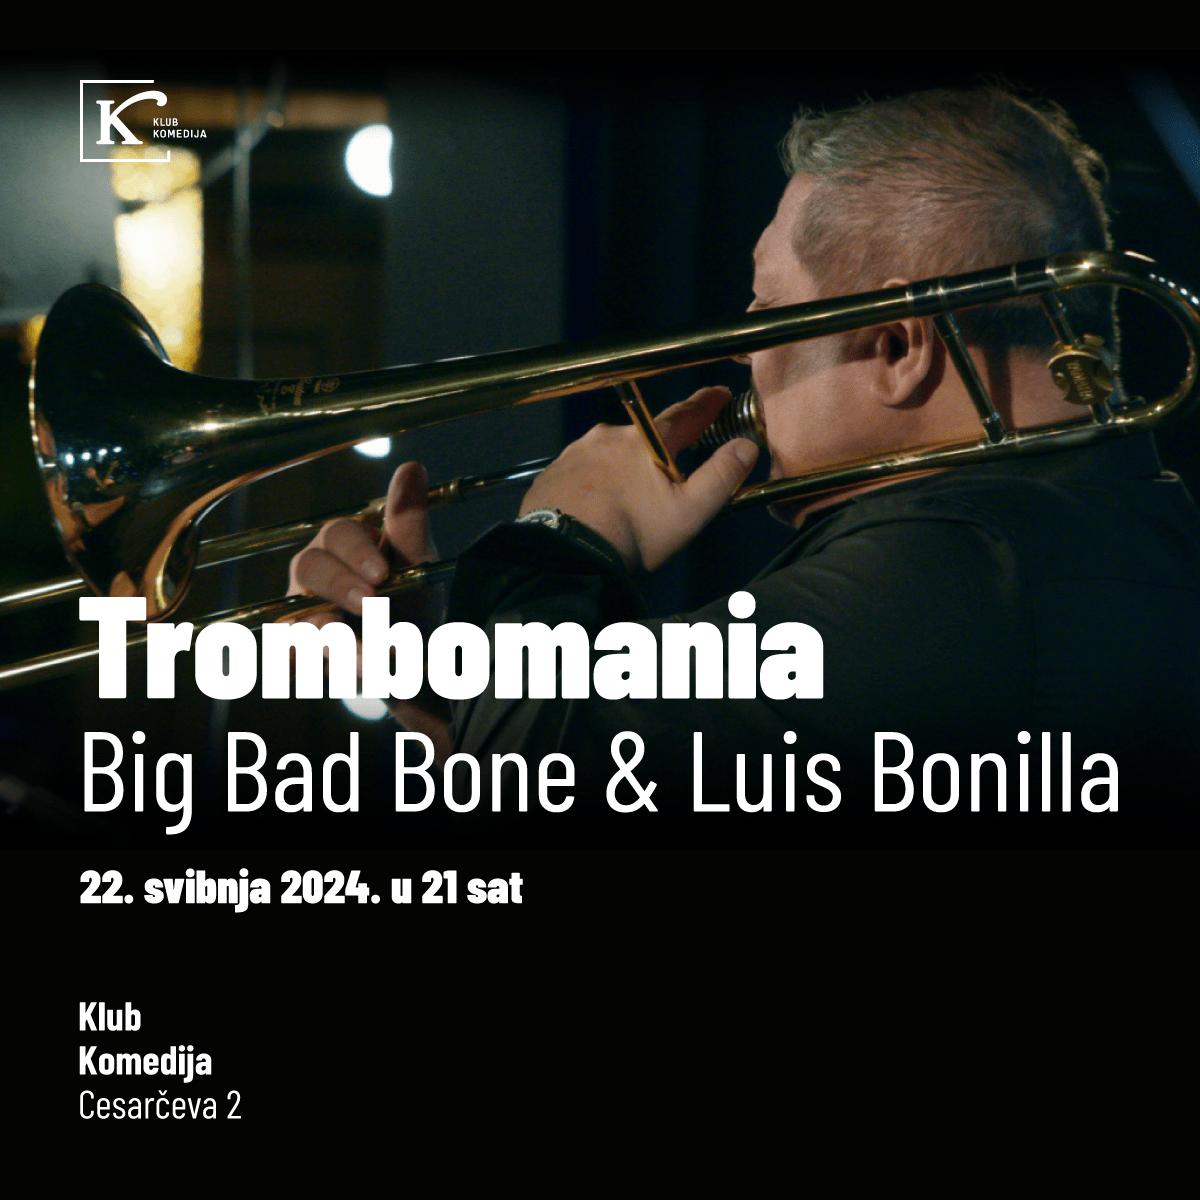 Trombomania – Big Bad Bones & Luis Bonilla